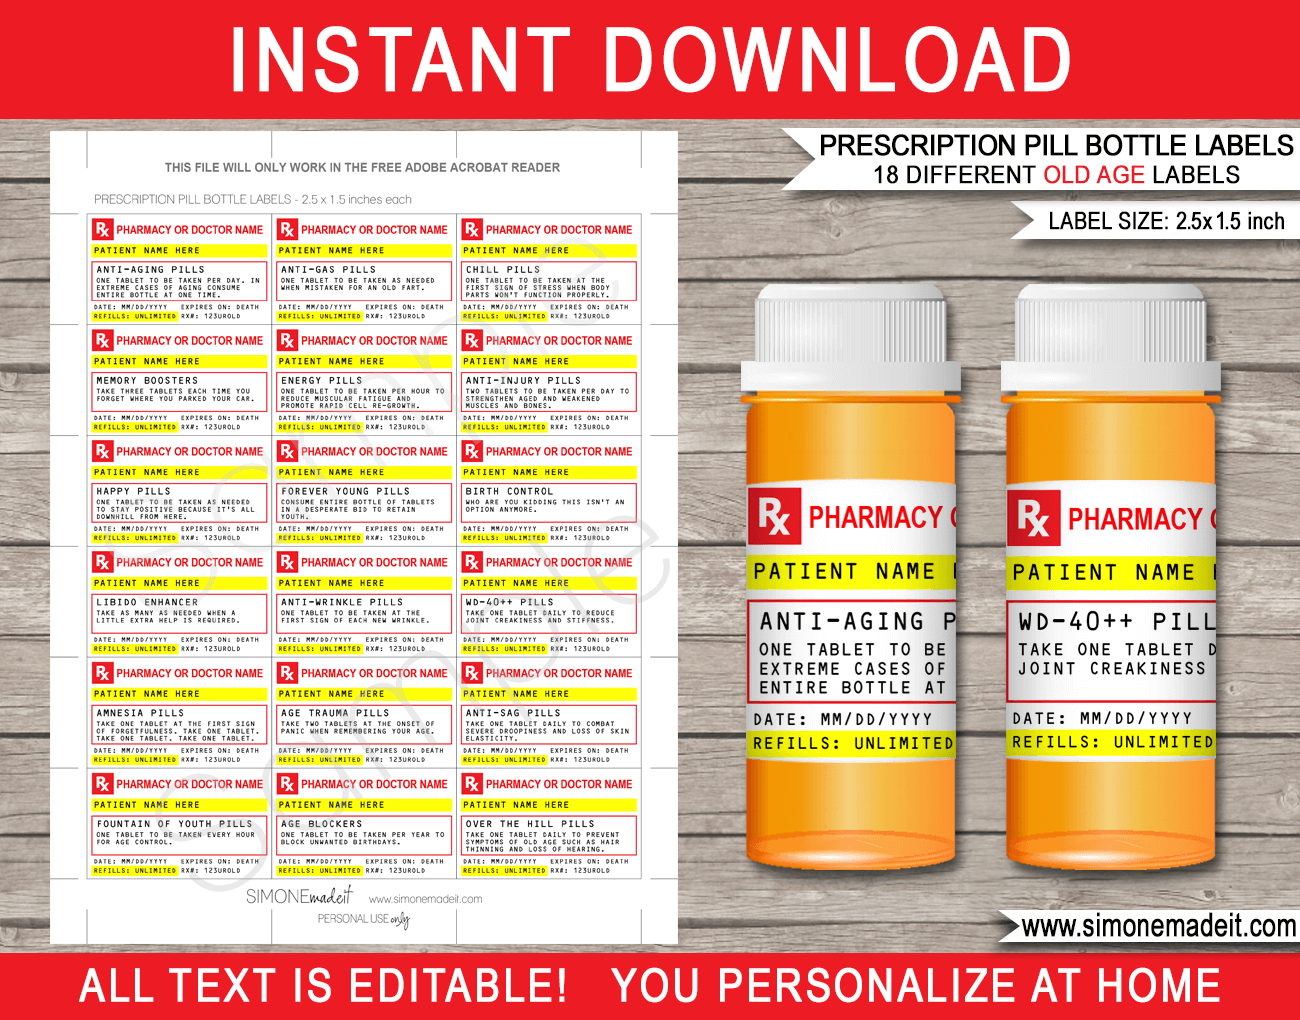 editable-text-instant-download-printable-rx-prescription-prescription